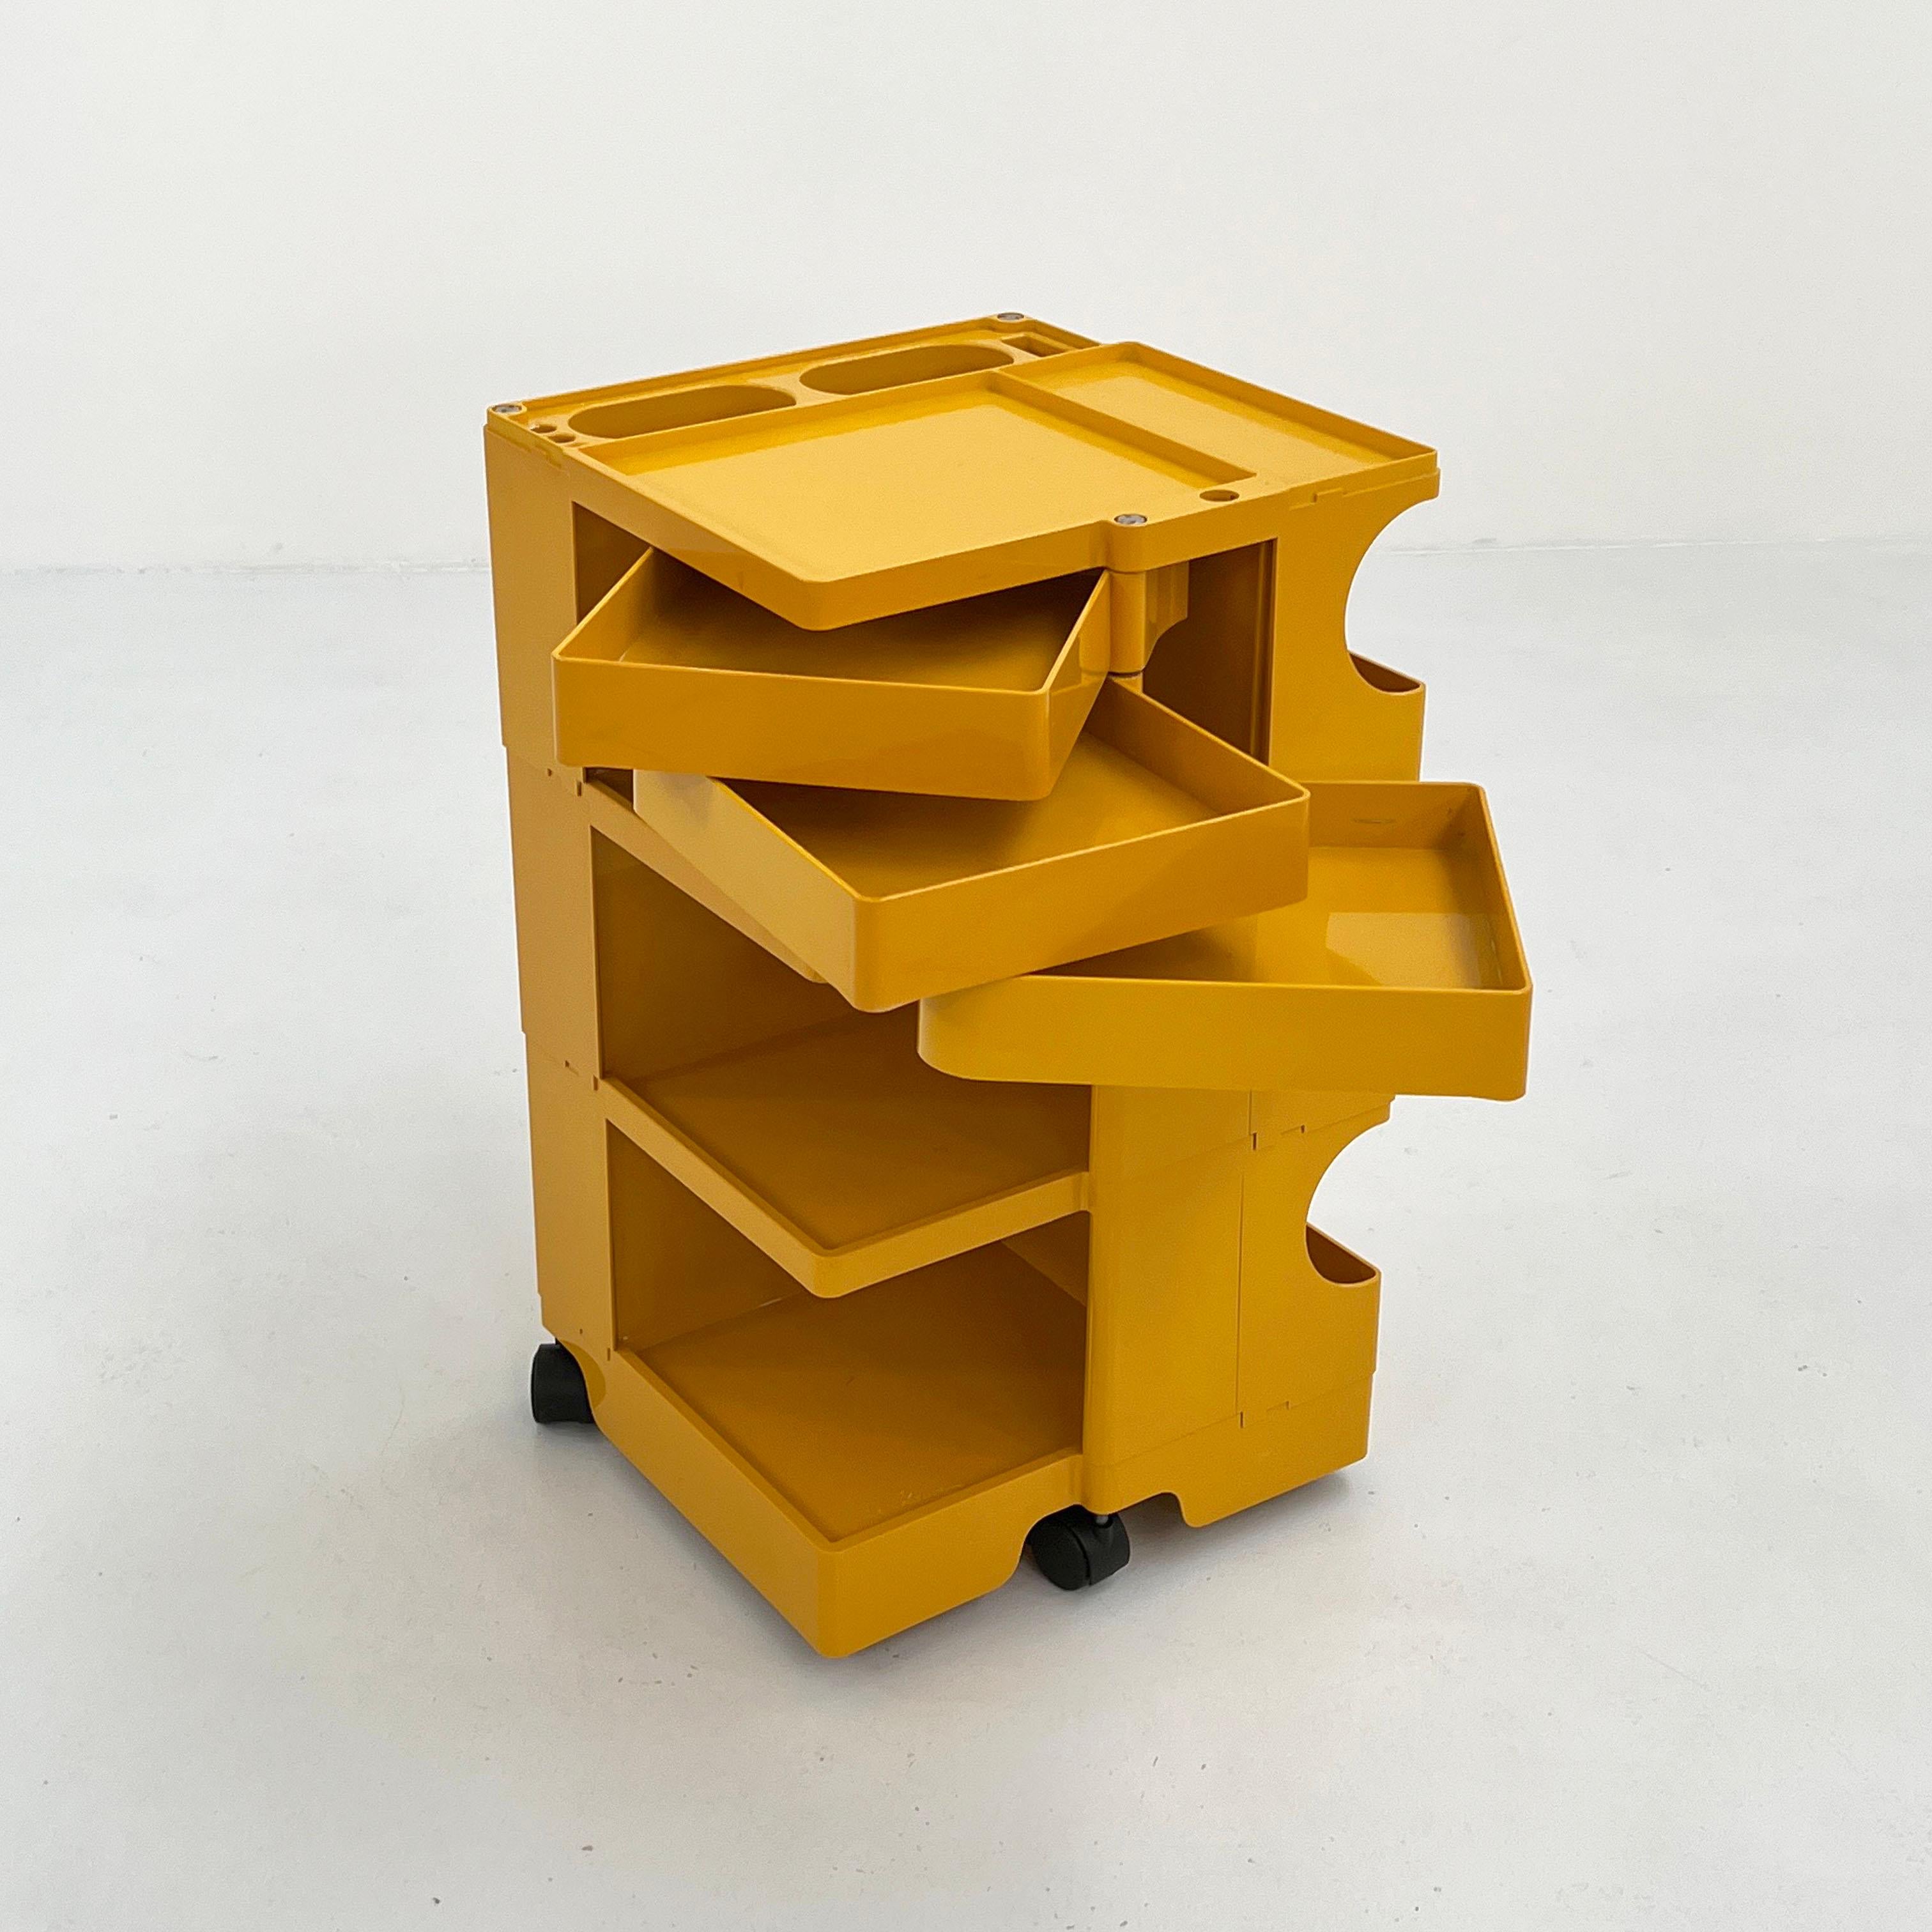 Mid-20th Century Yellow Boby Trolley by Joe Colombo for Bieffeplast, 1960s